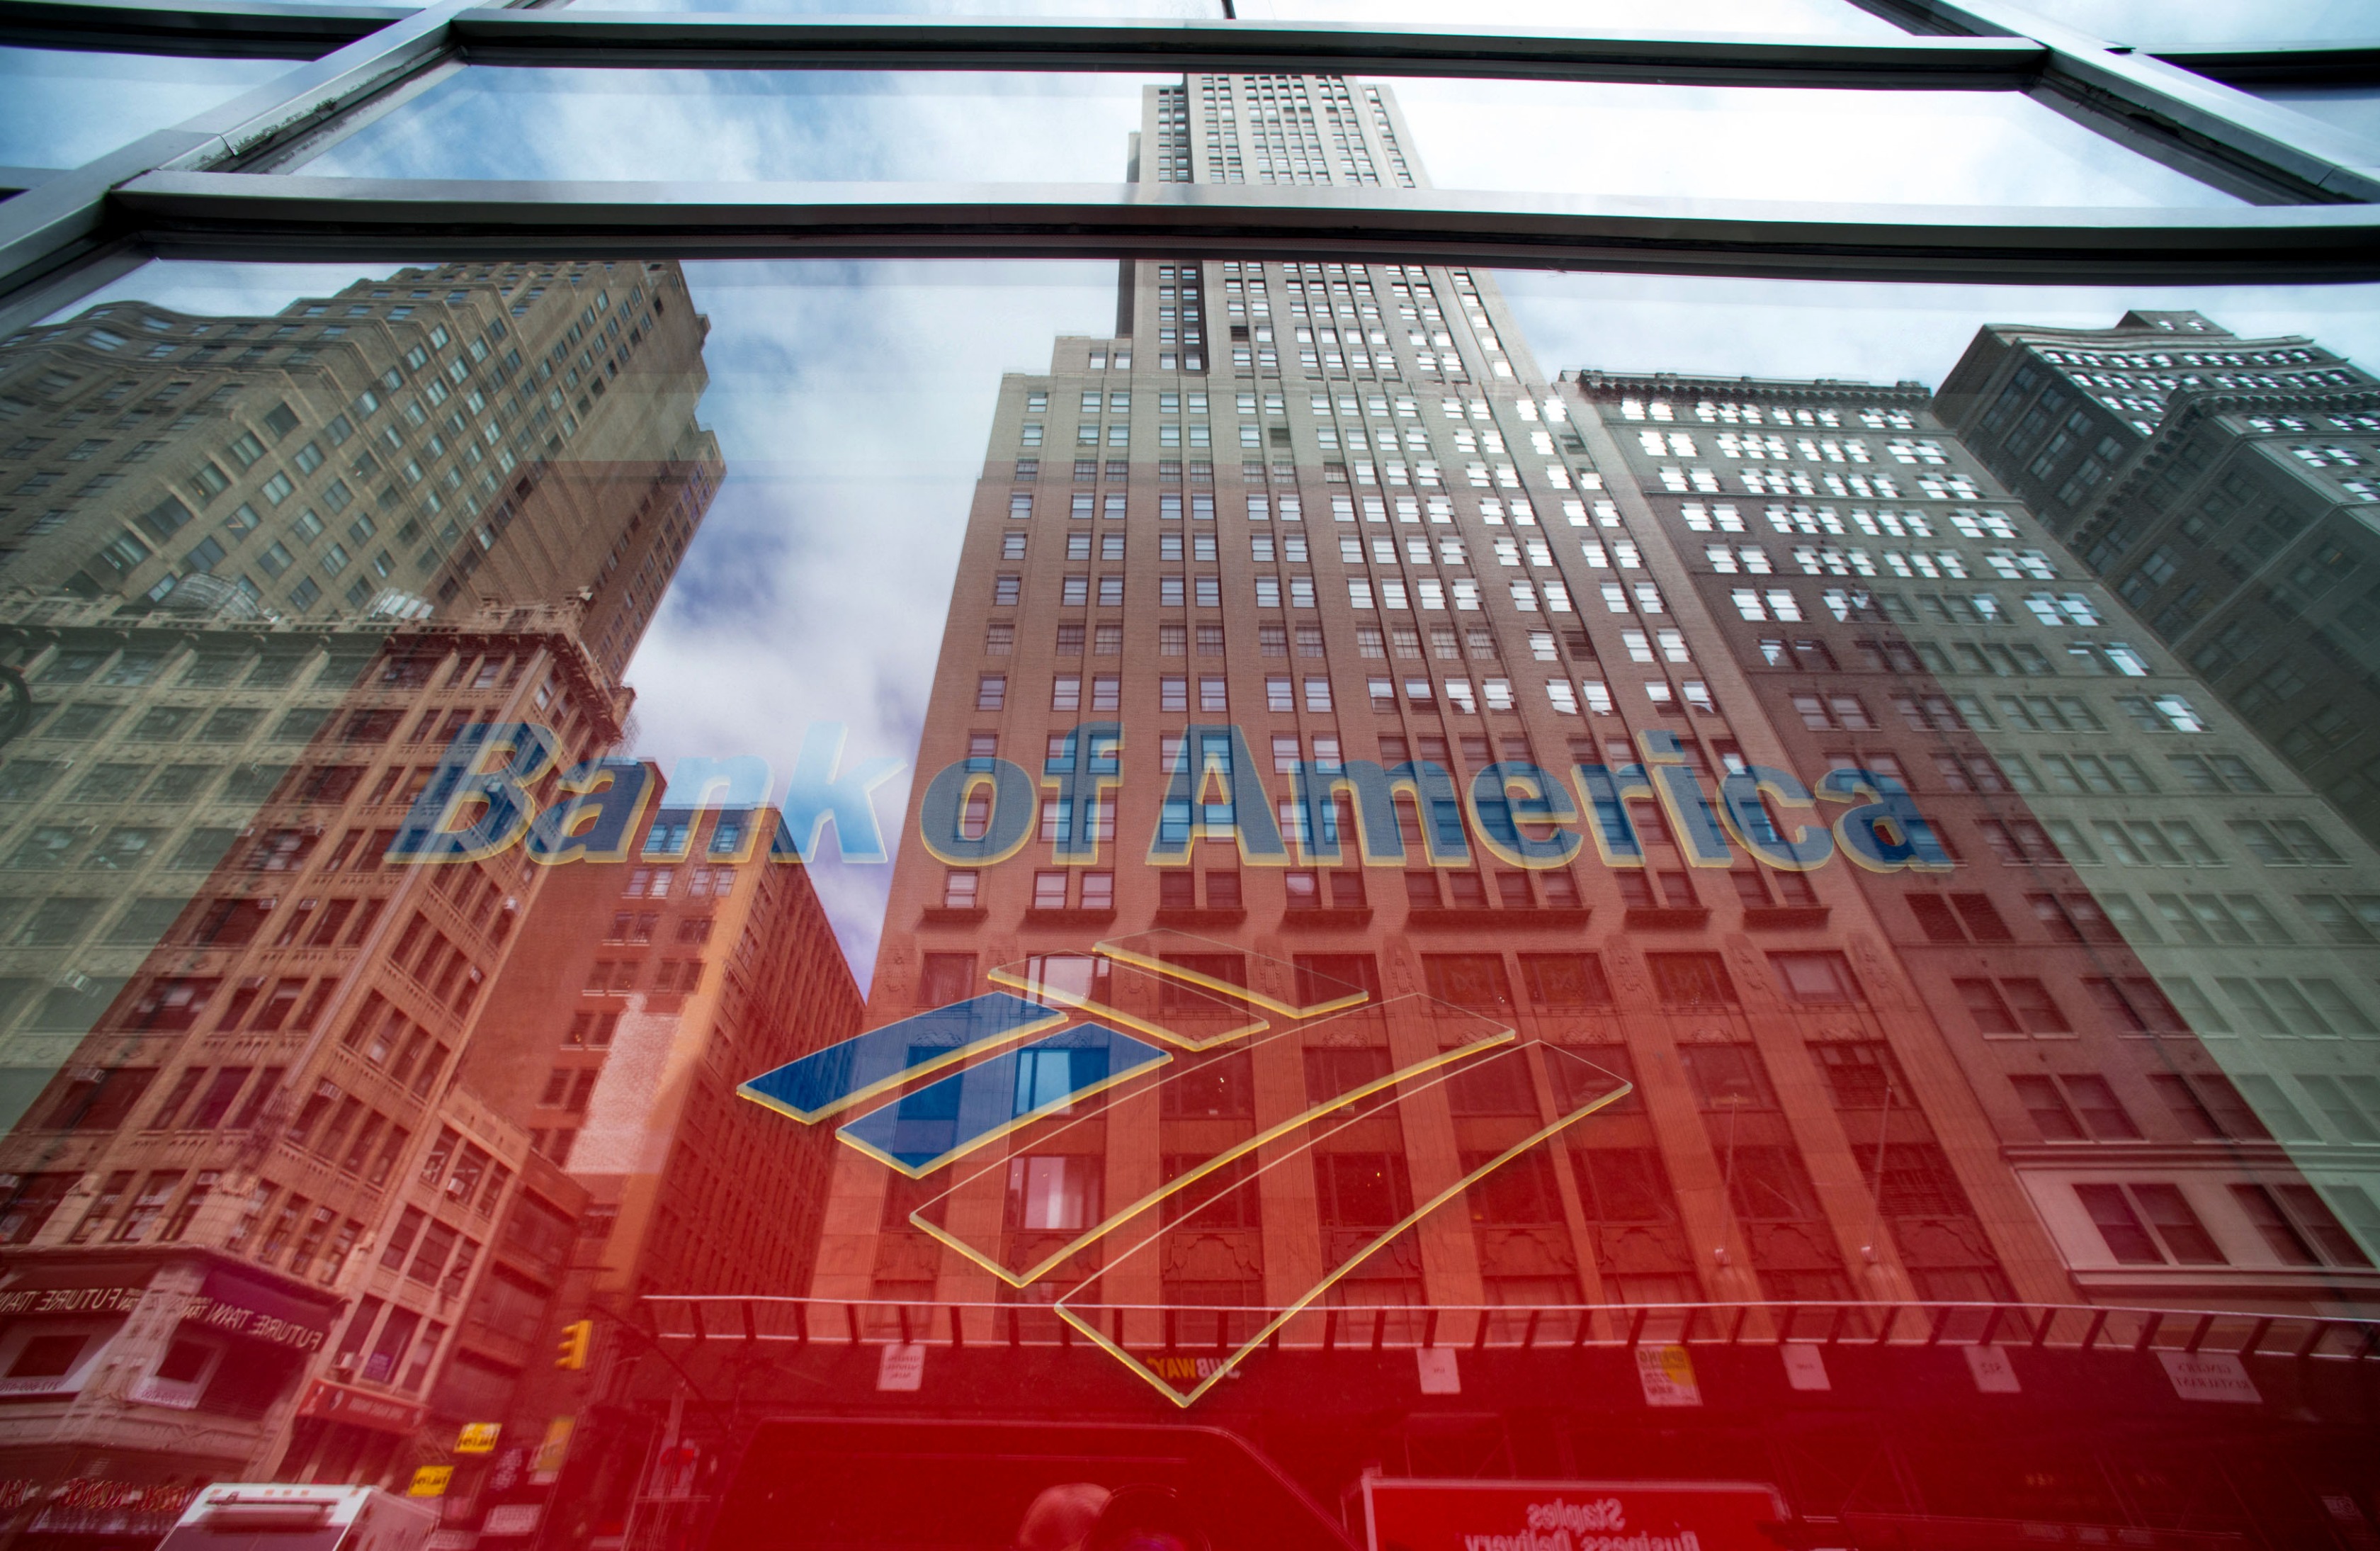 Bank of America branch in New York.